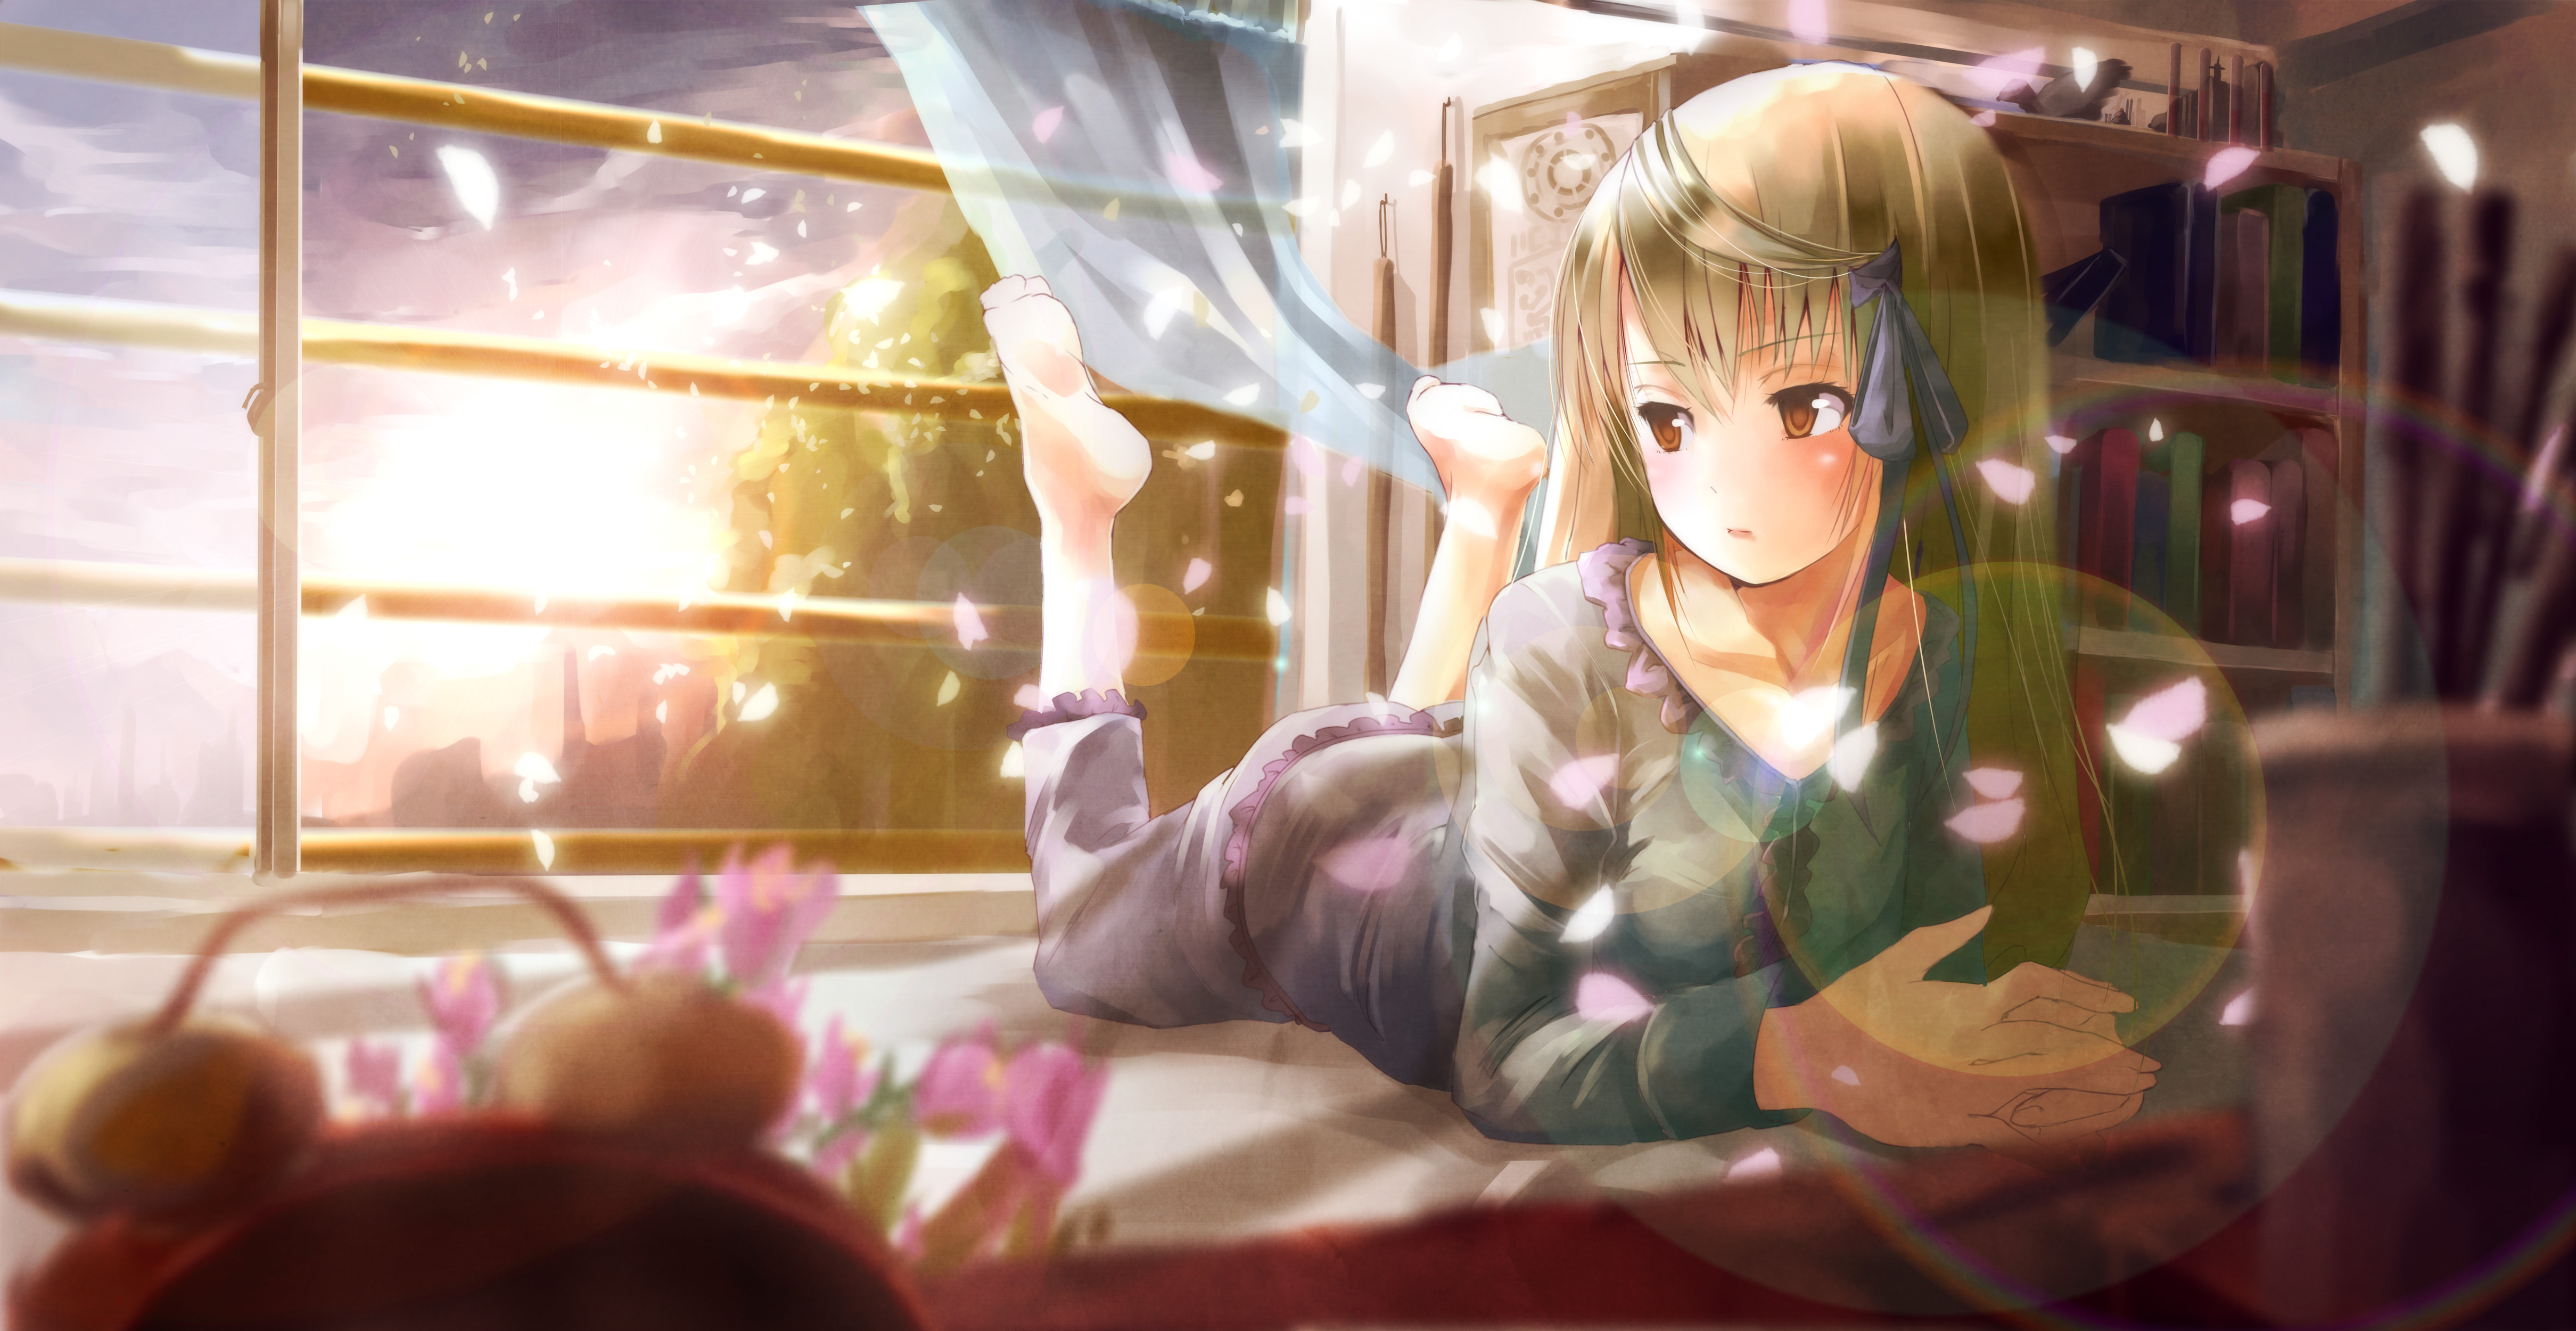 window, Pillow, bed, sunset, anime, anime girl, wallpaper, original